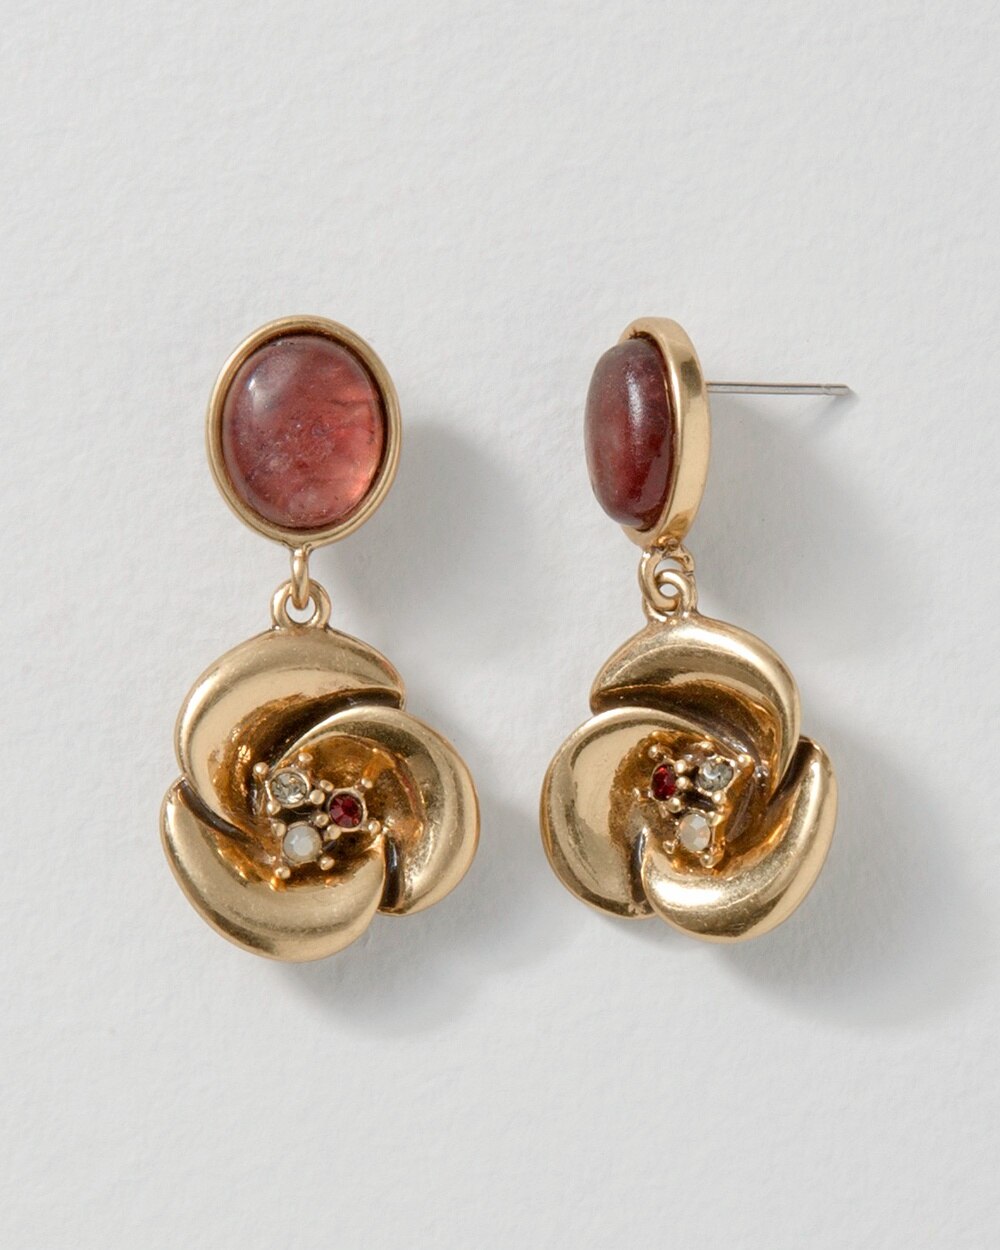 Antique Goldtone Flower Earrings